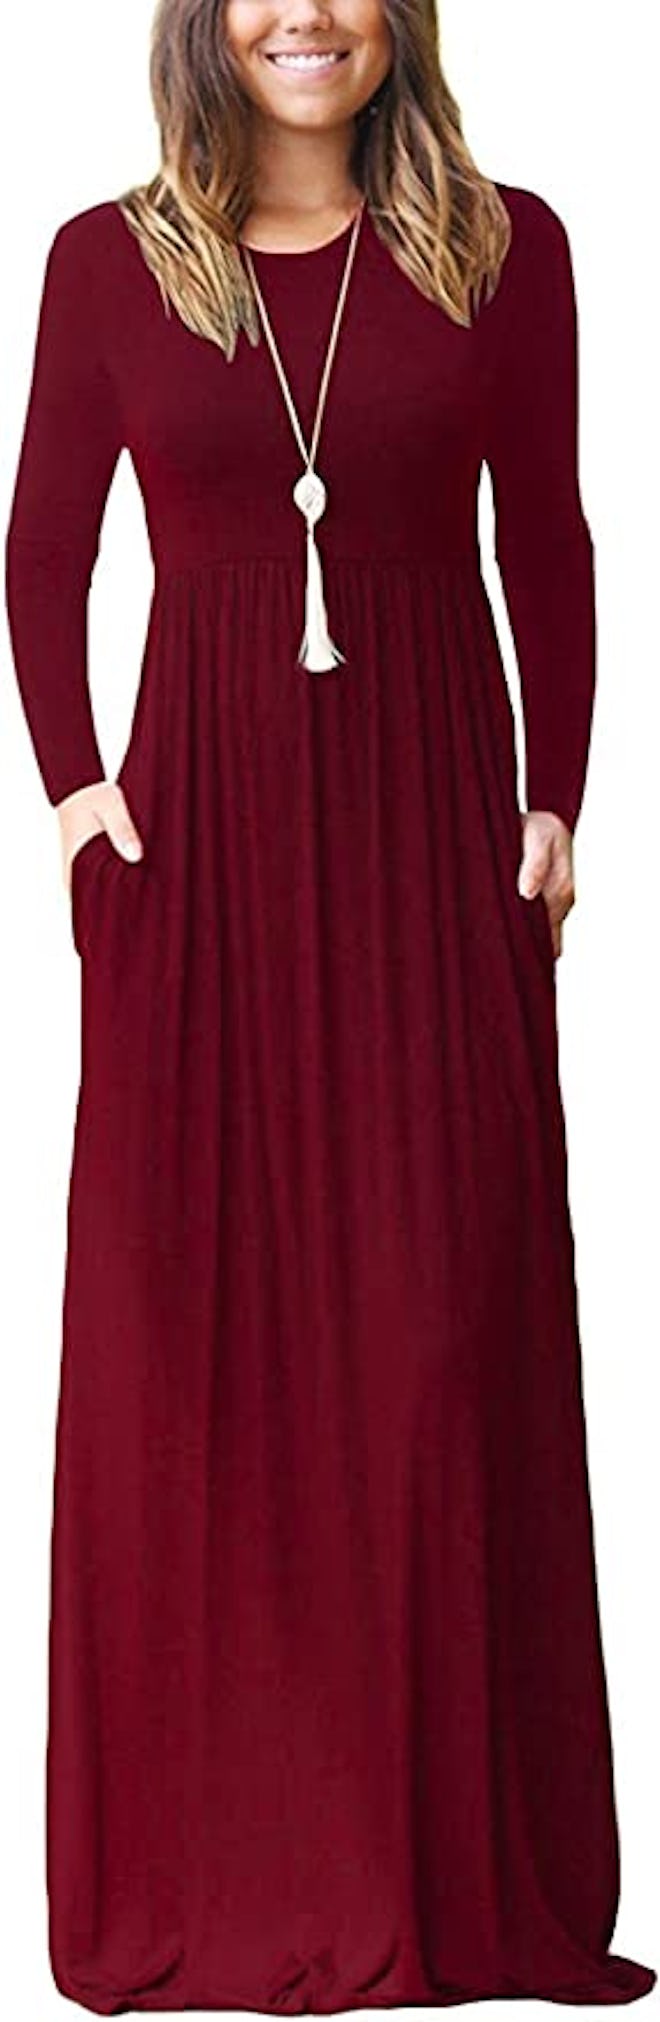 AUSELILY Long Sleeve Maxi Dress